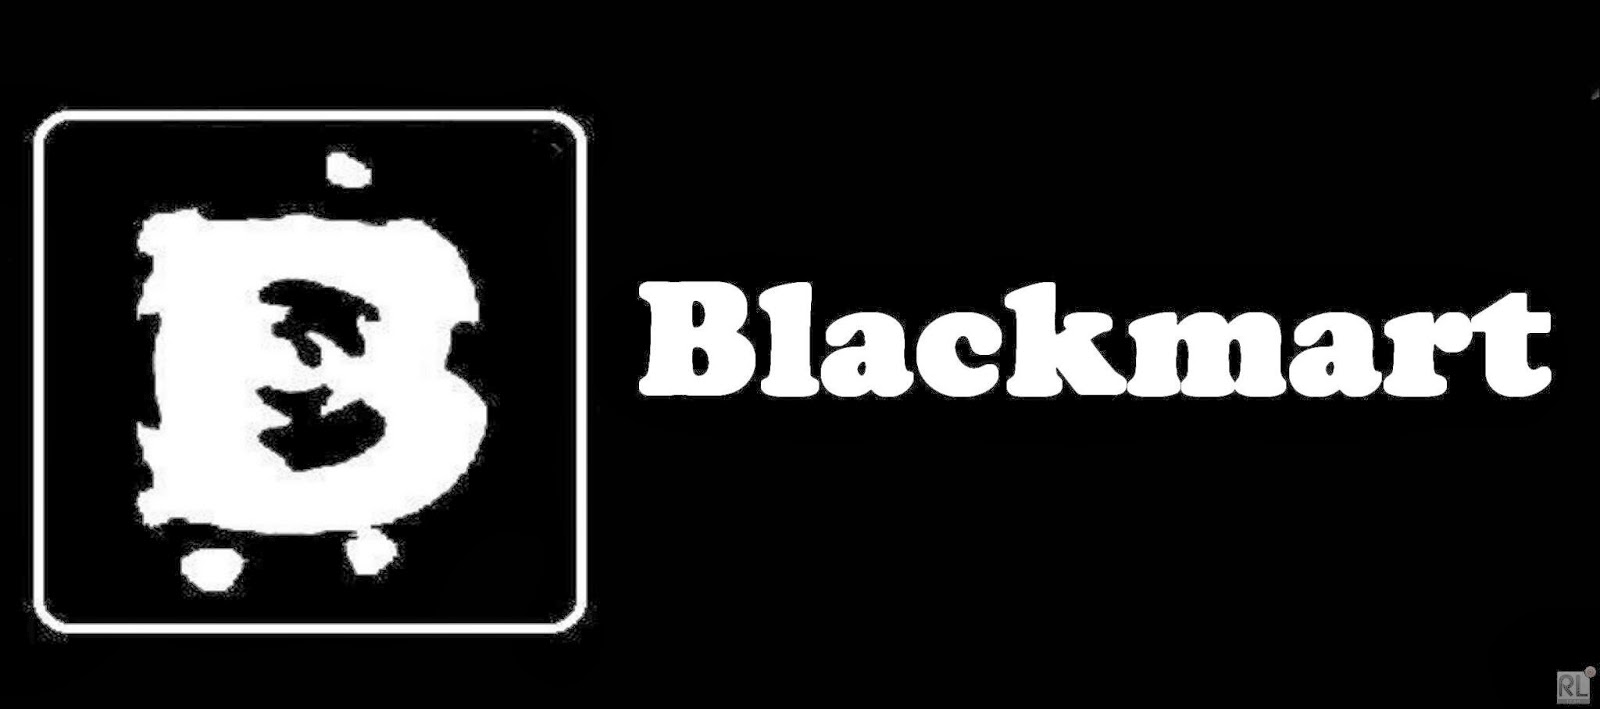 ... download: NEW BlackMart Alpha v3.49.(New version blackmarket.) APK